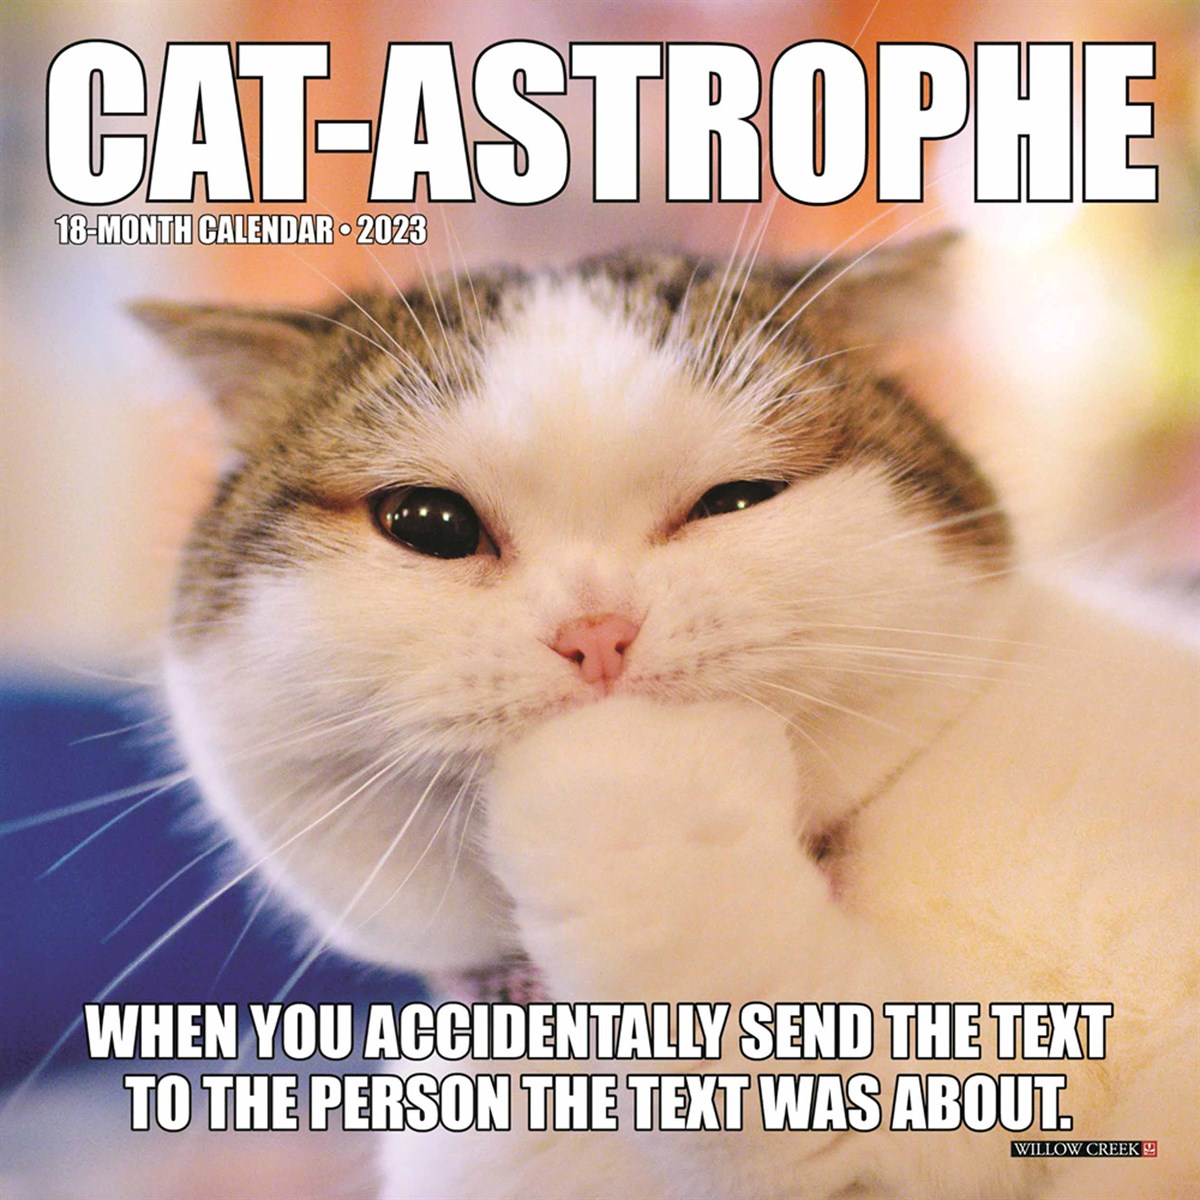 Cat-Astrophe Mini 2023 Calendars